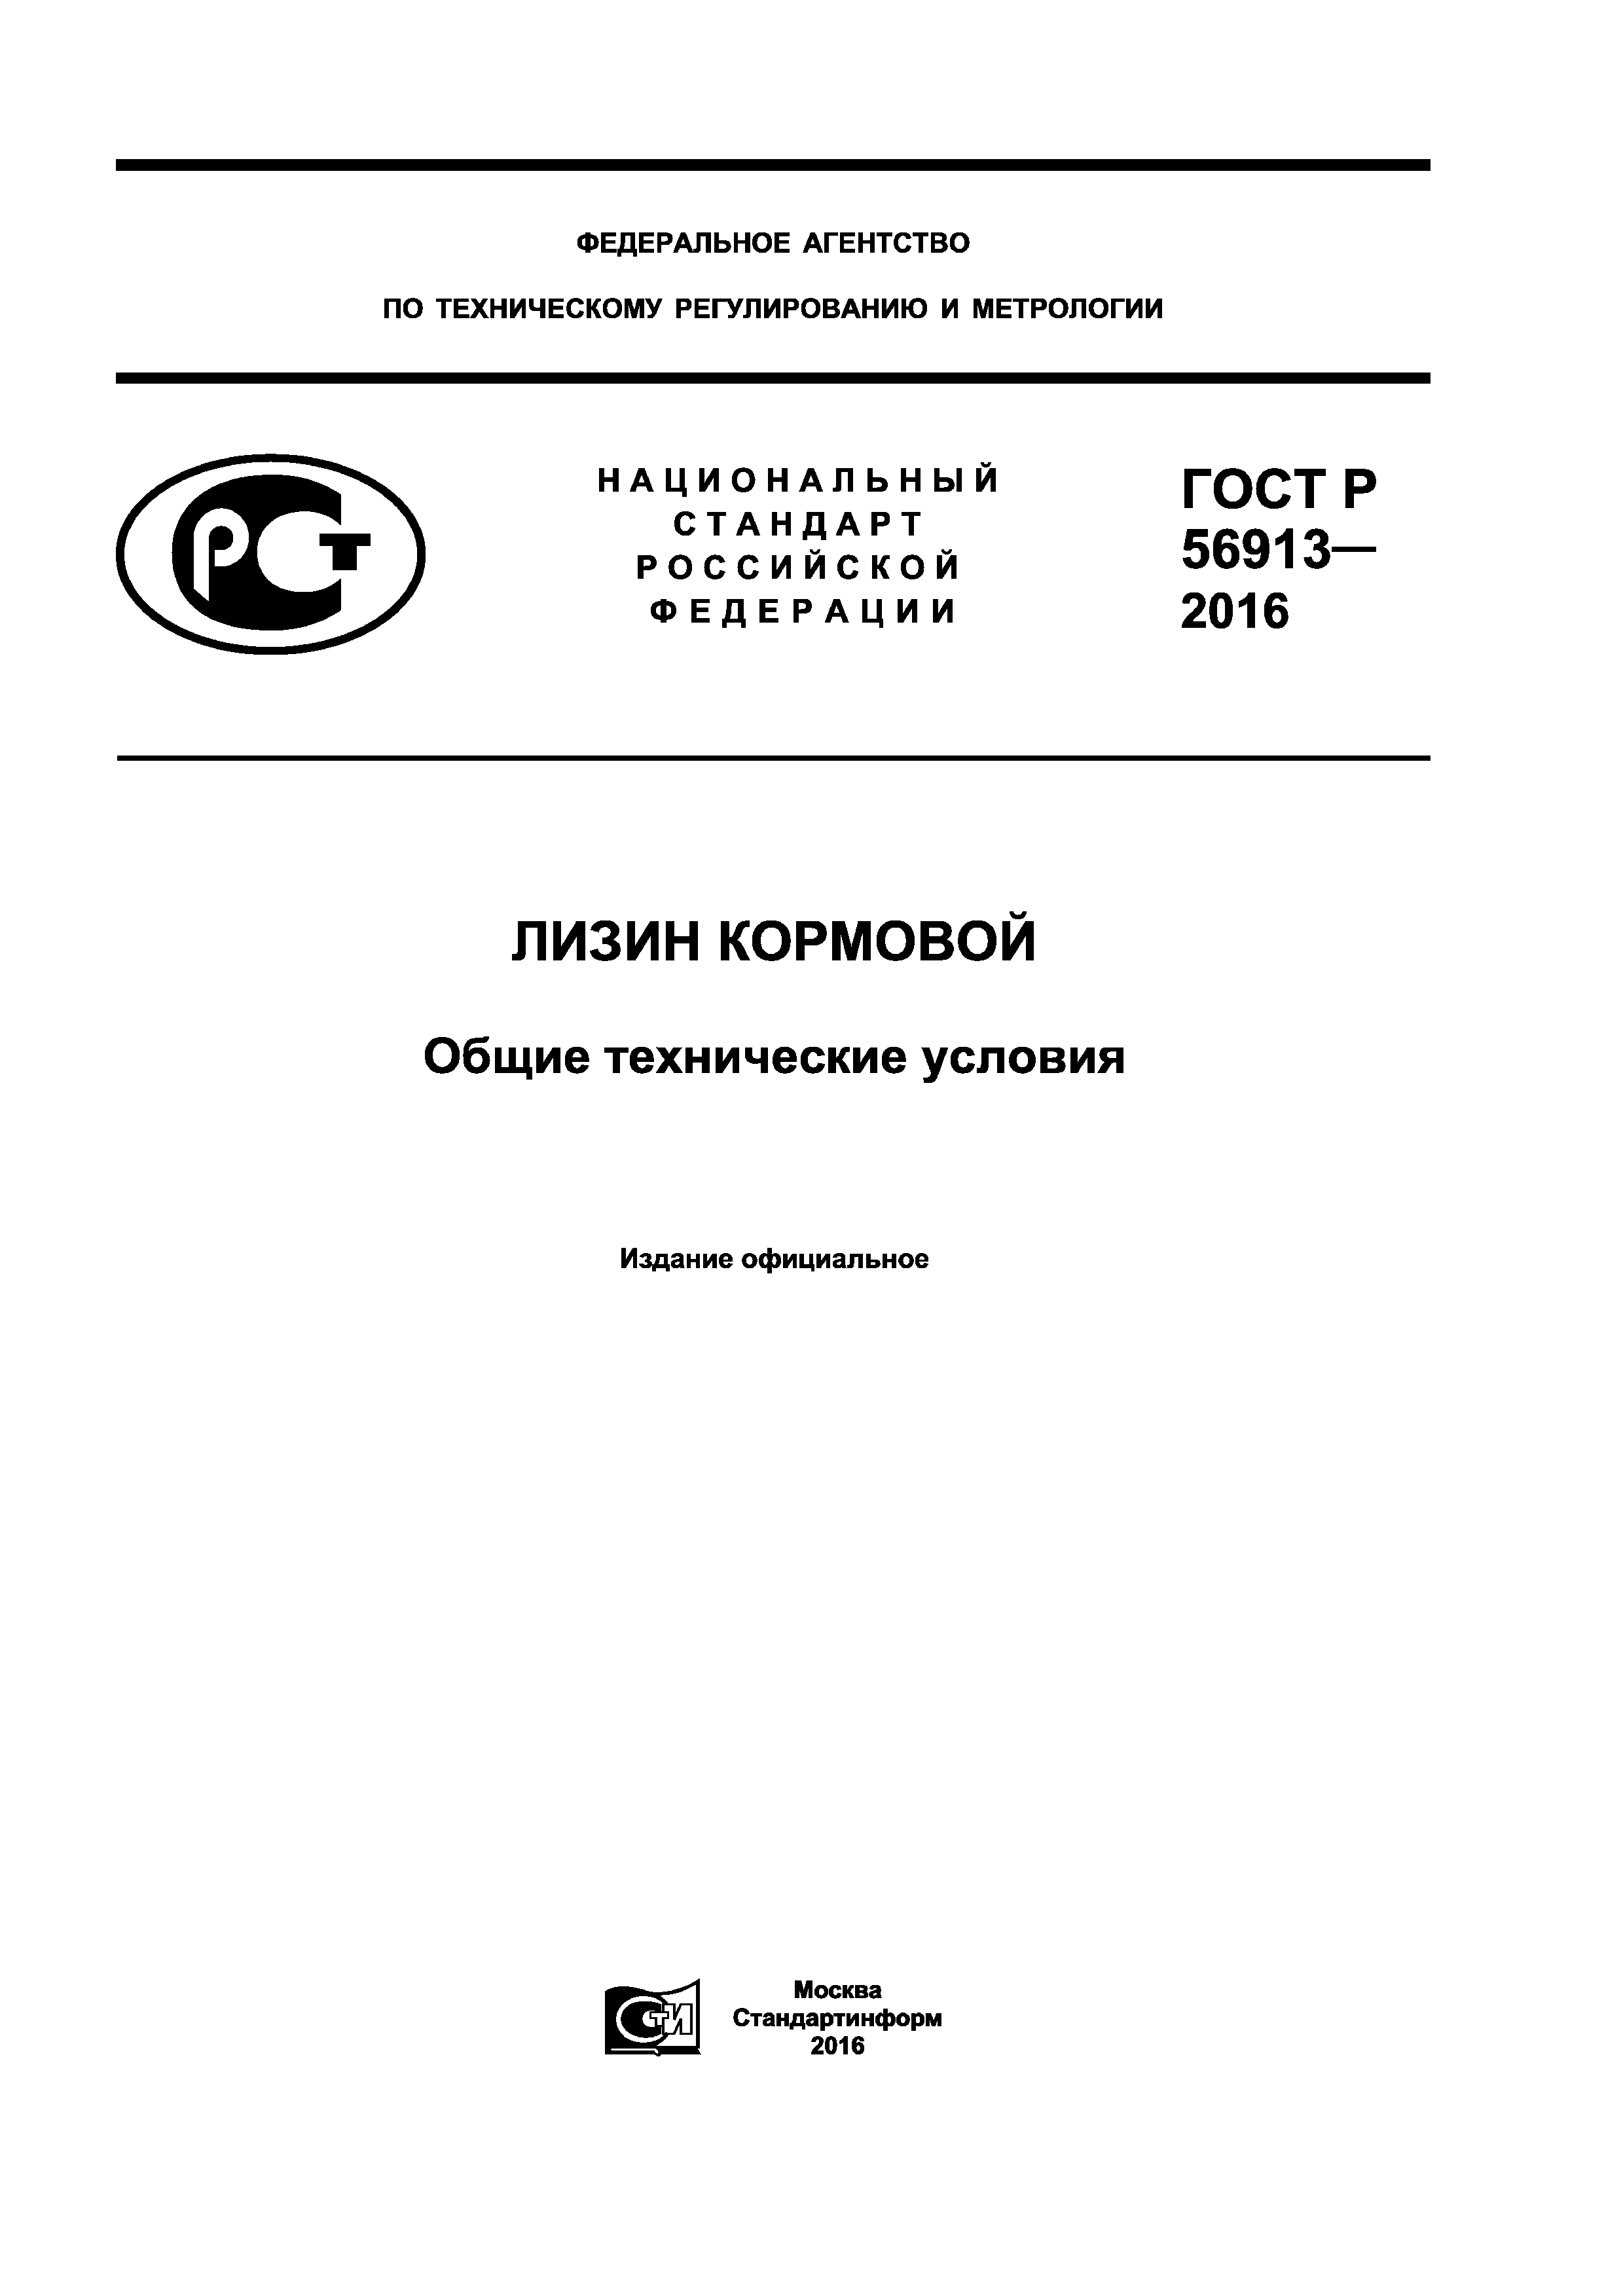 ГОСТ Р 56913-2016